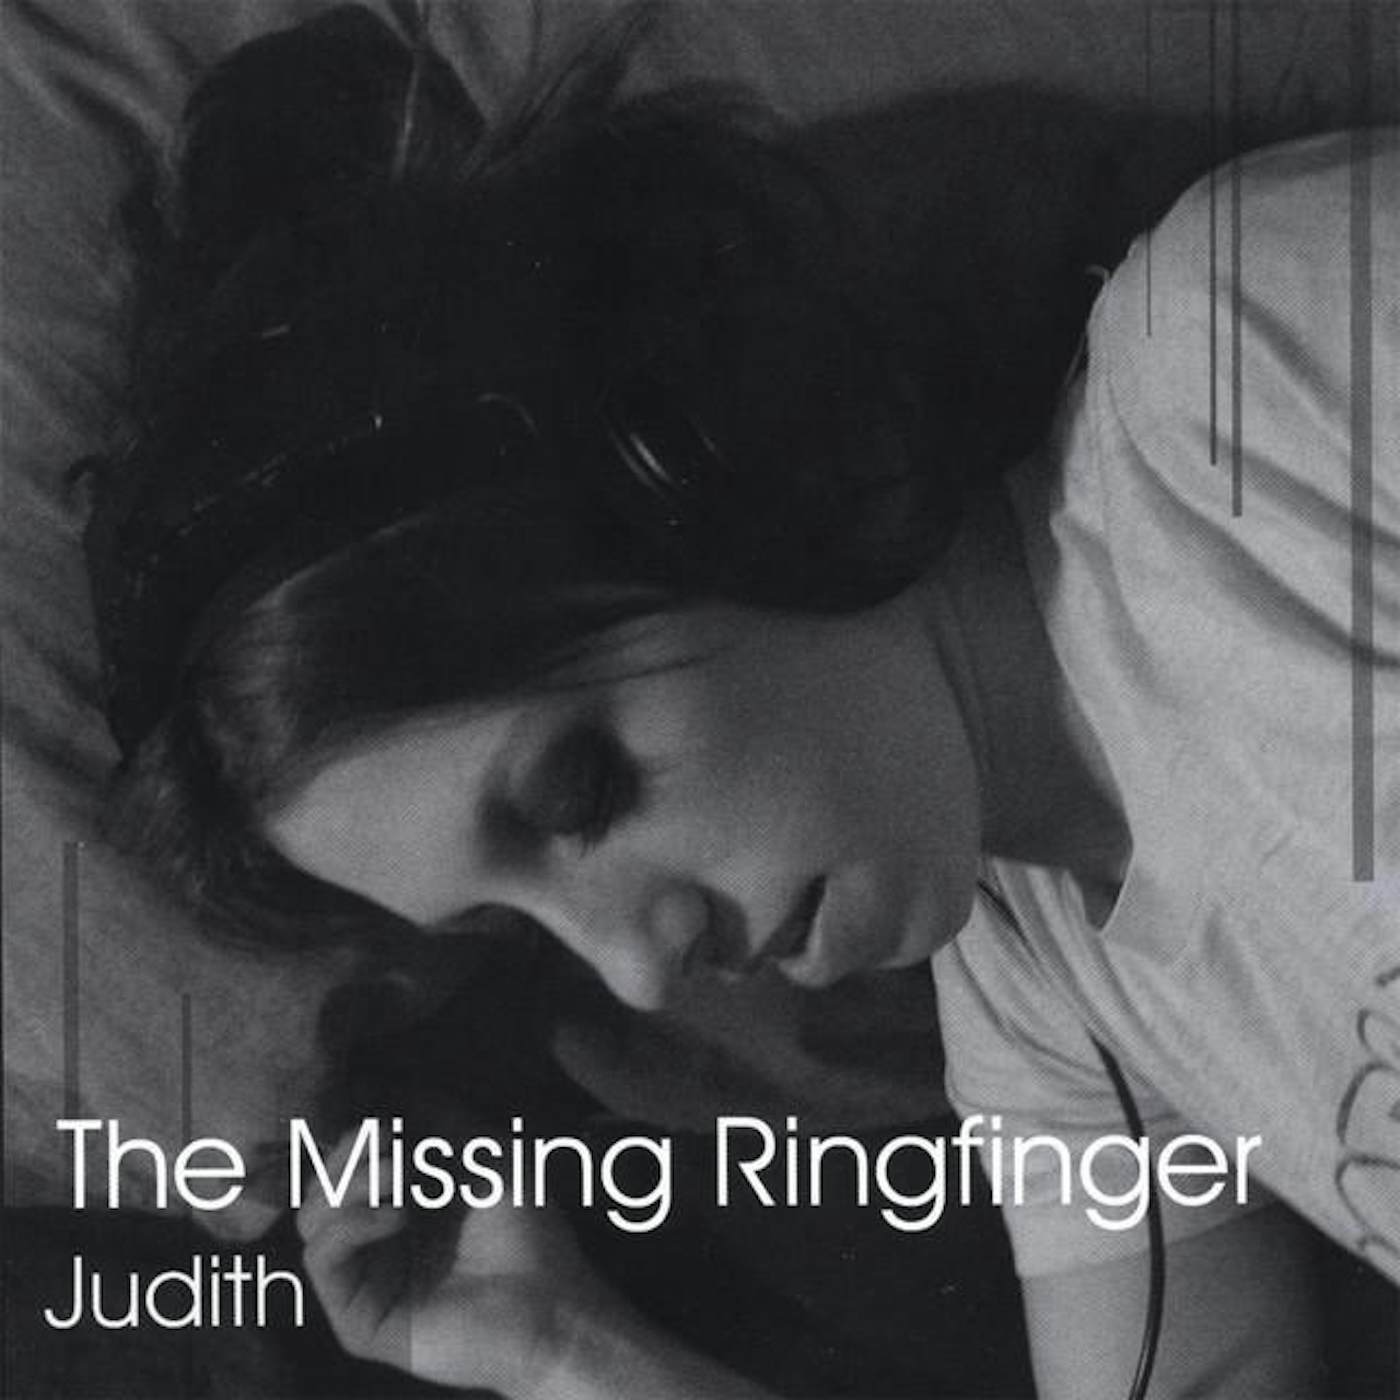 The Missing Ringfinger